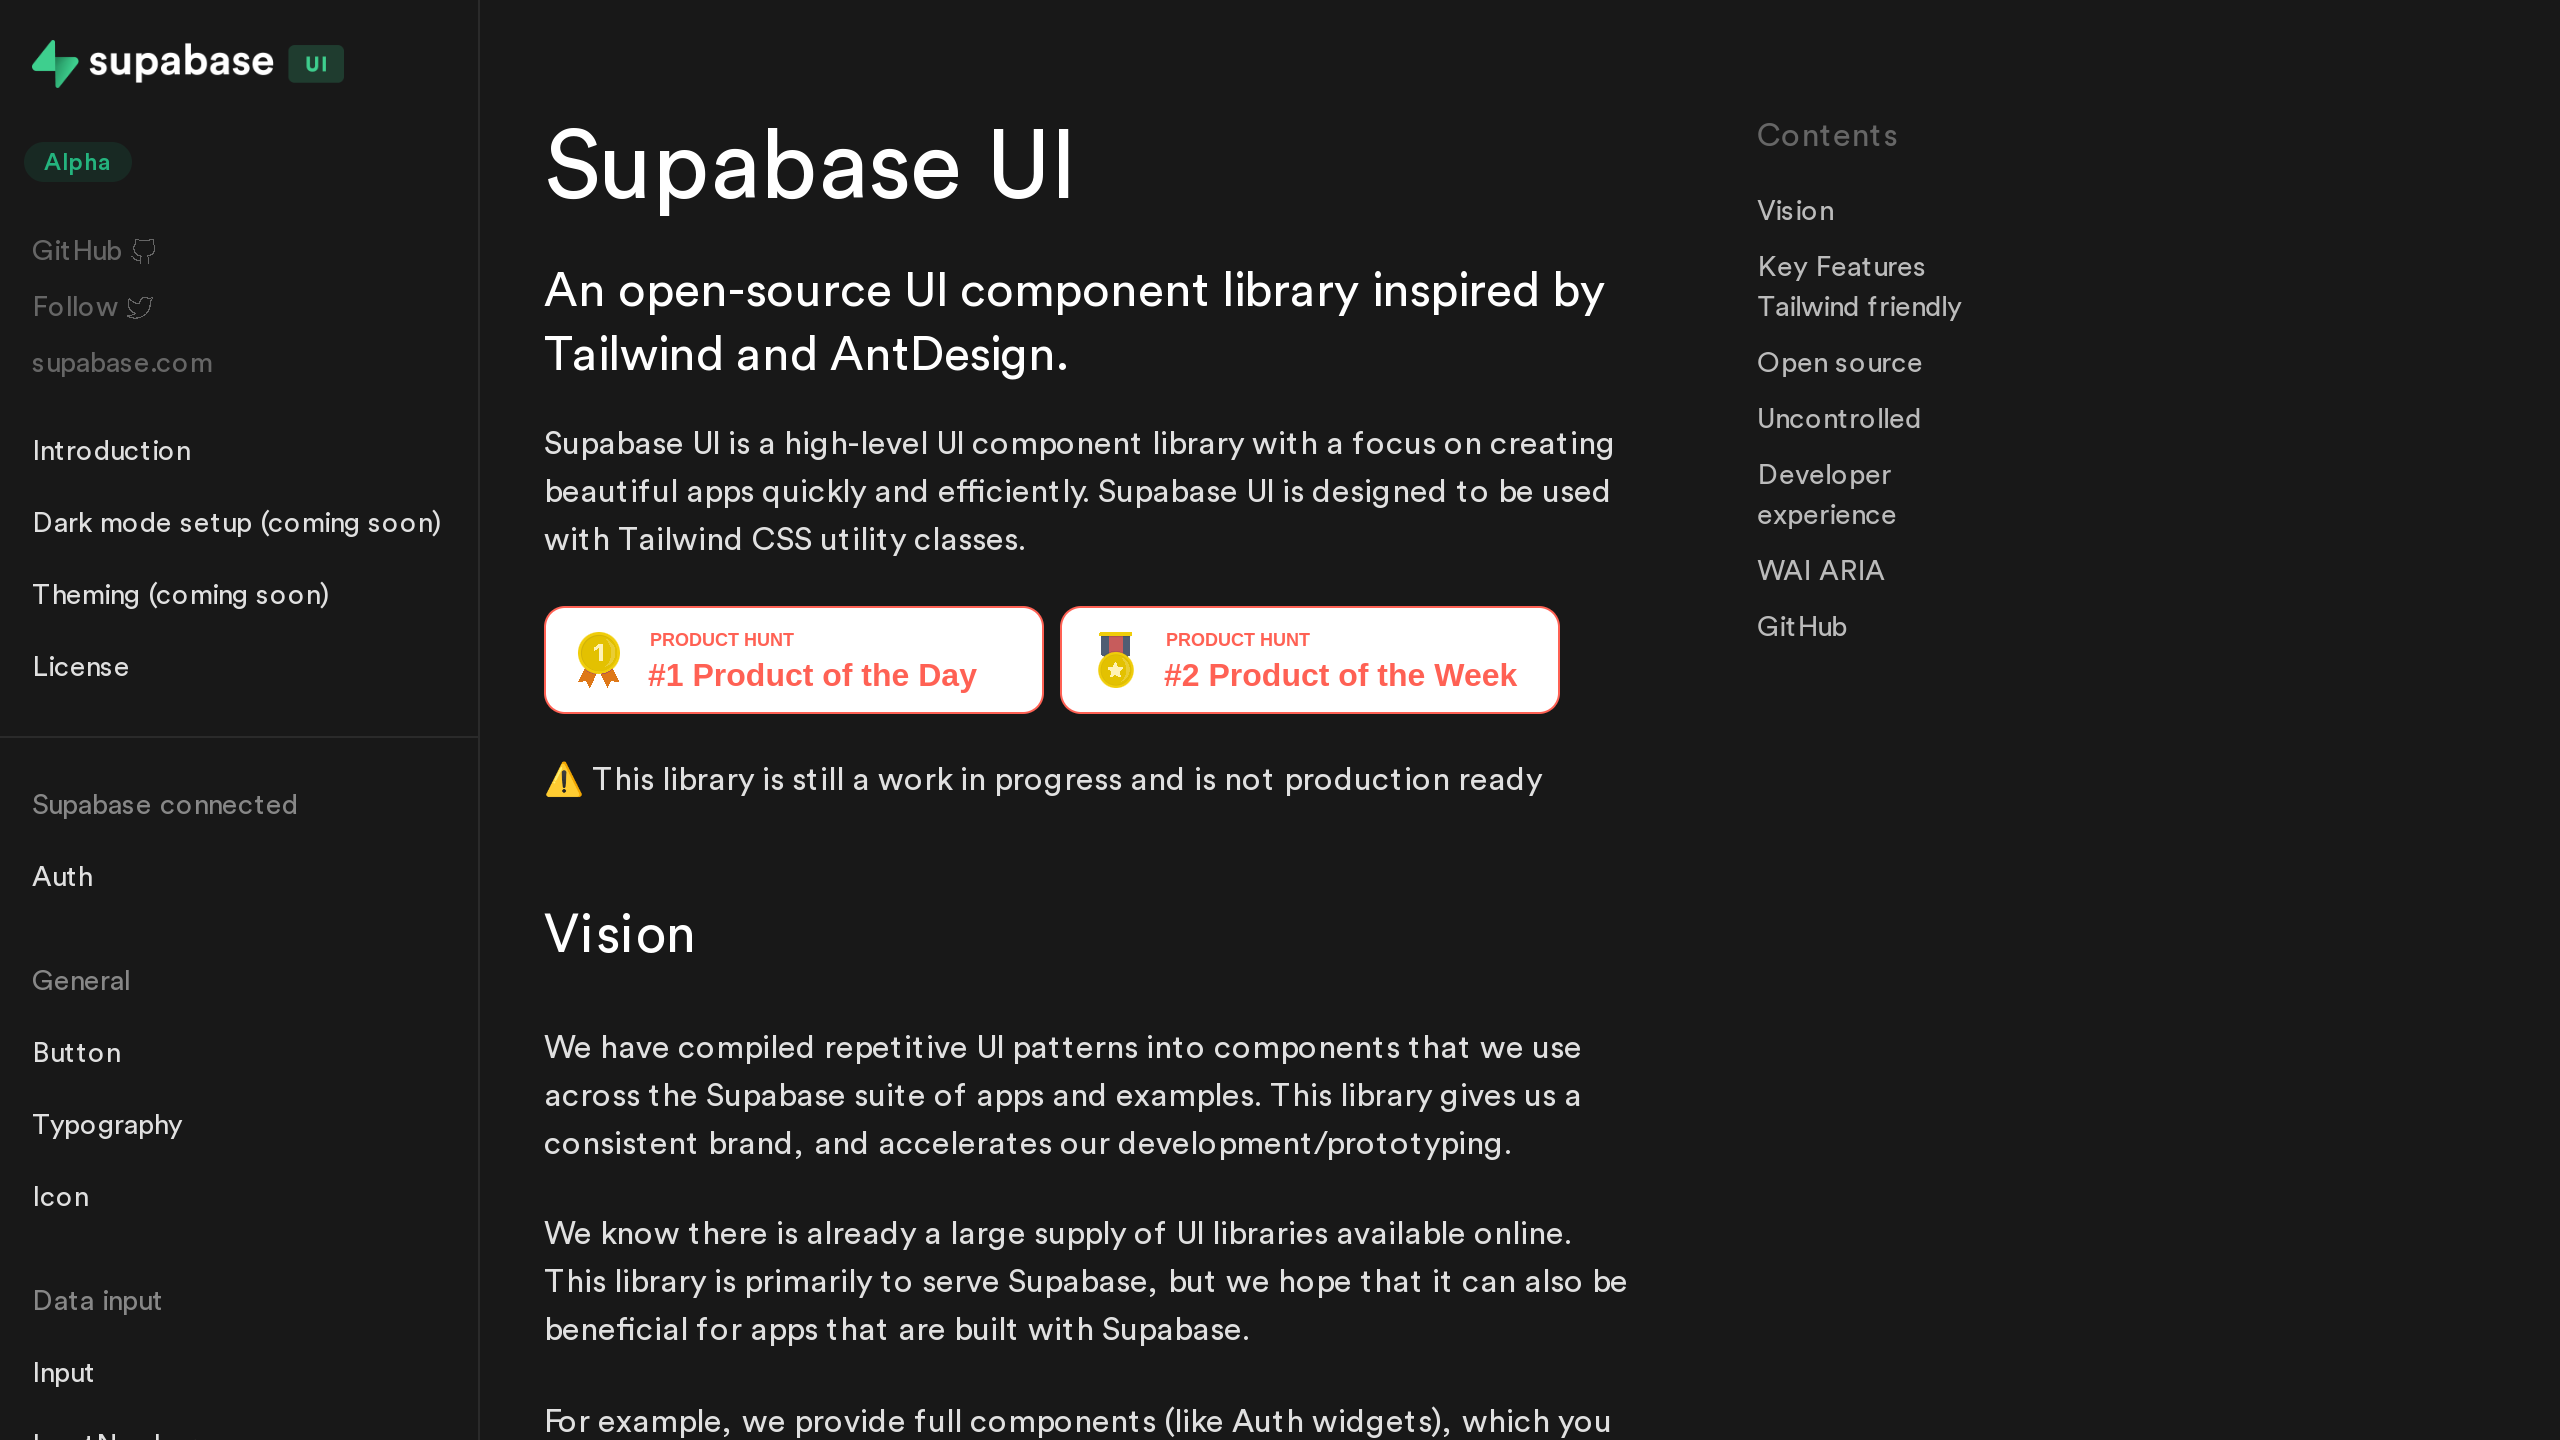 Supabase UI's website screenshot